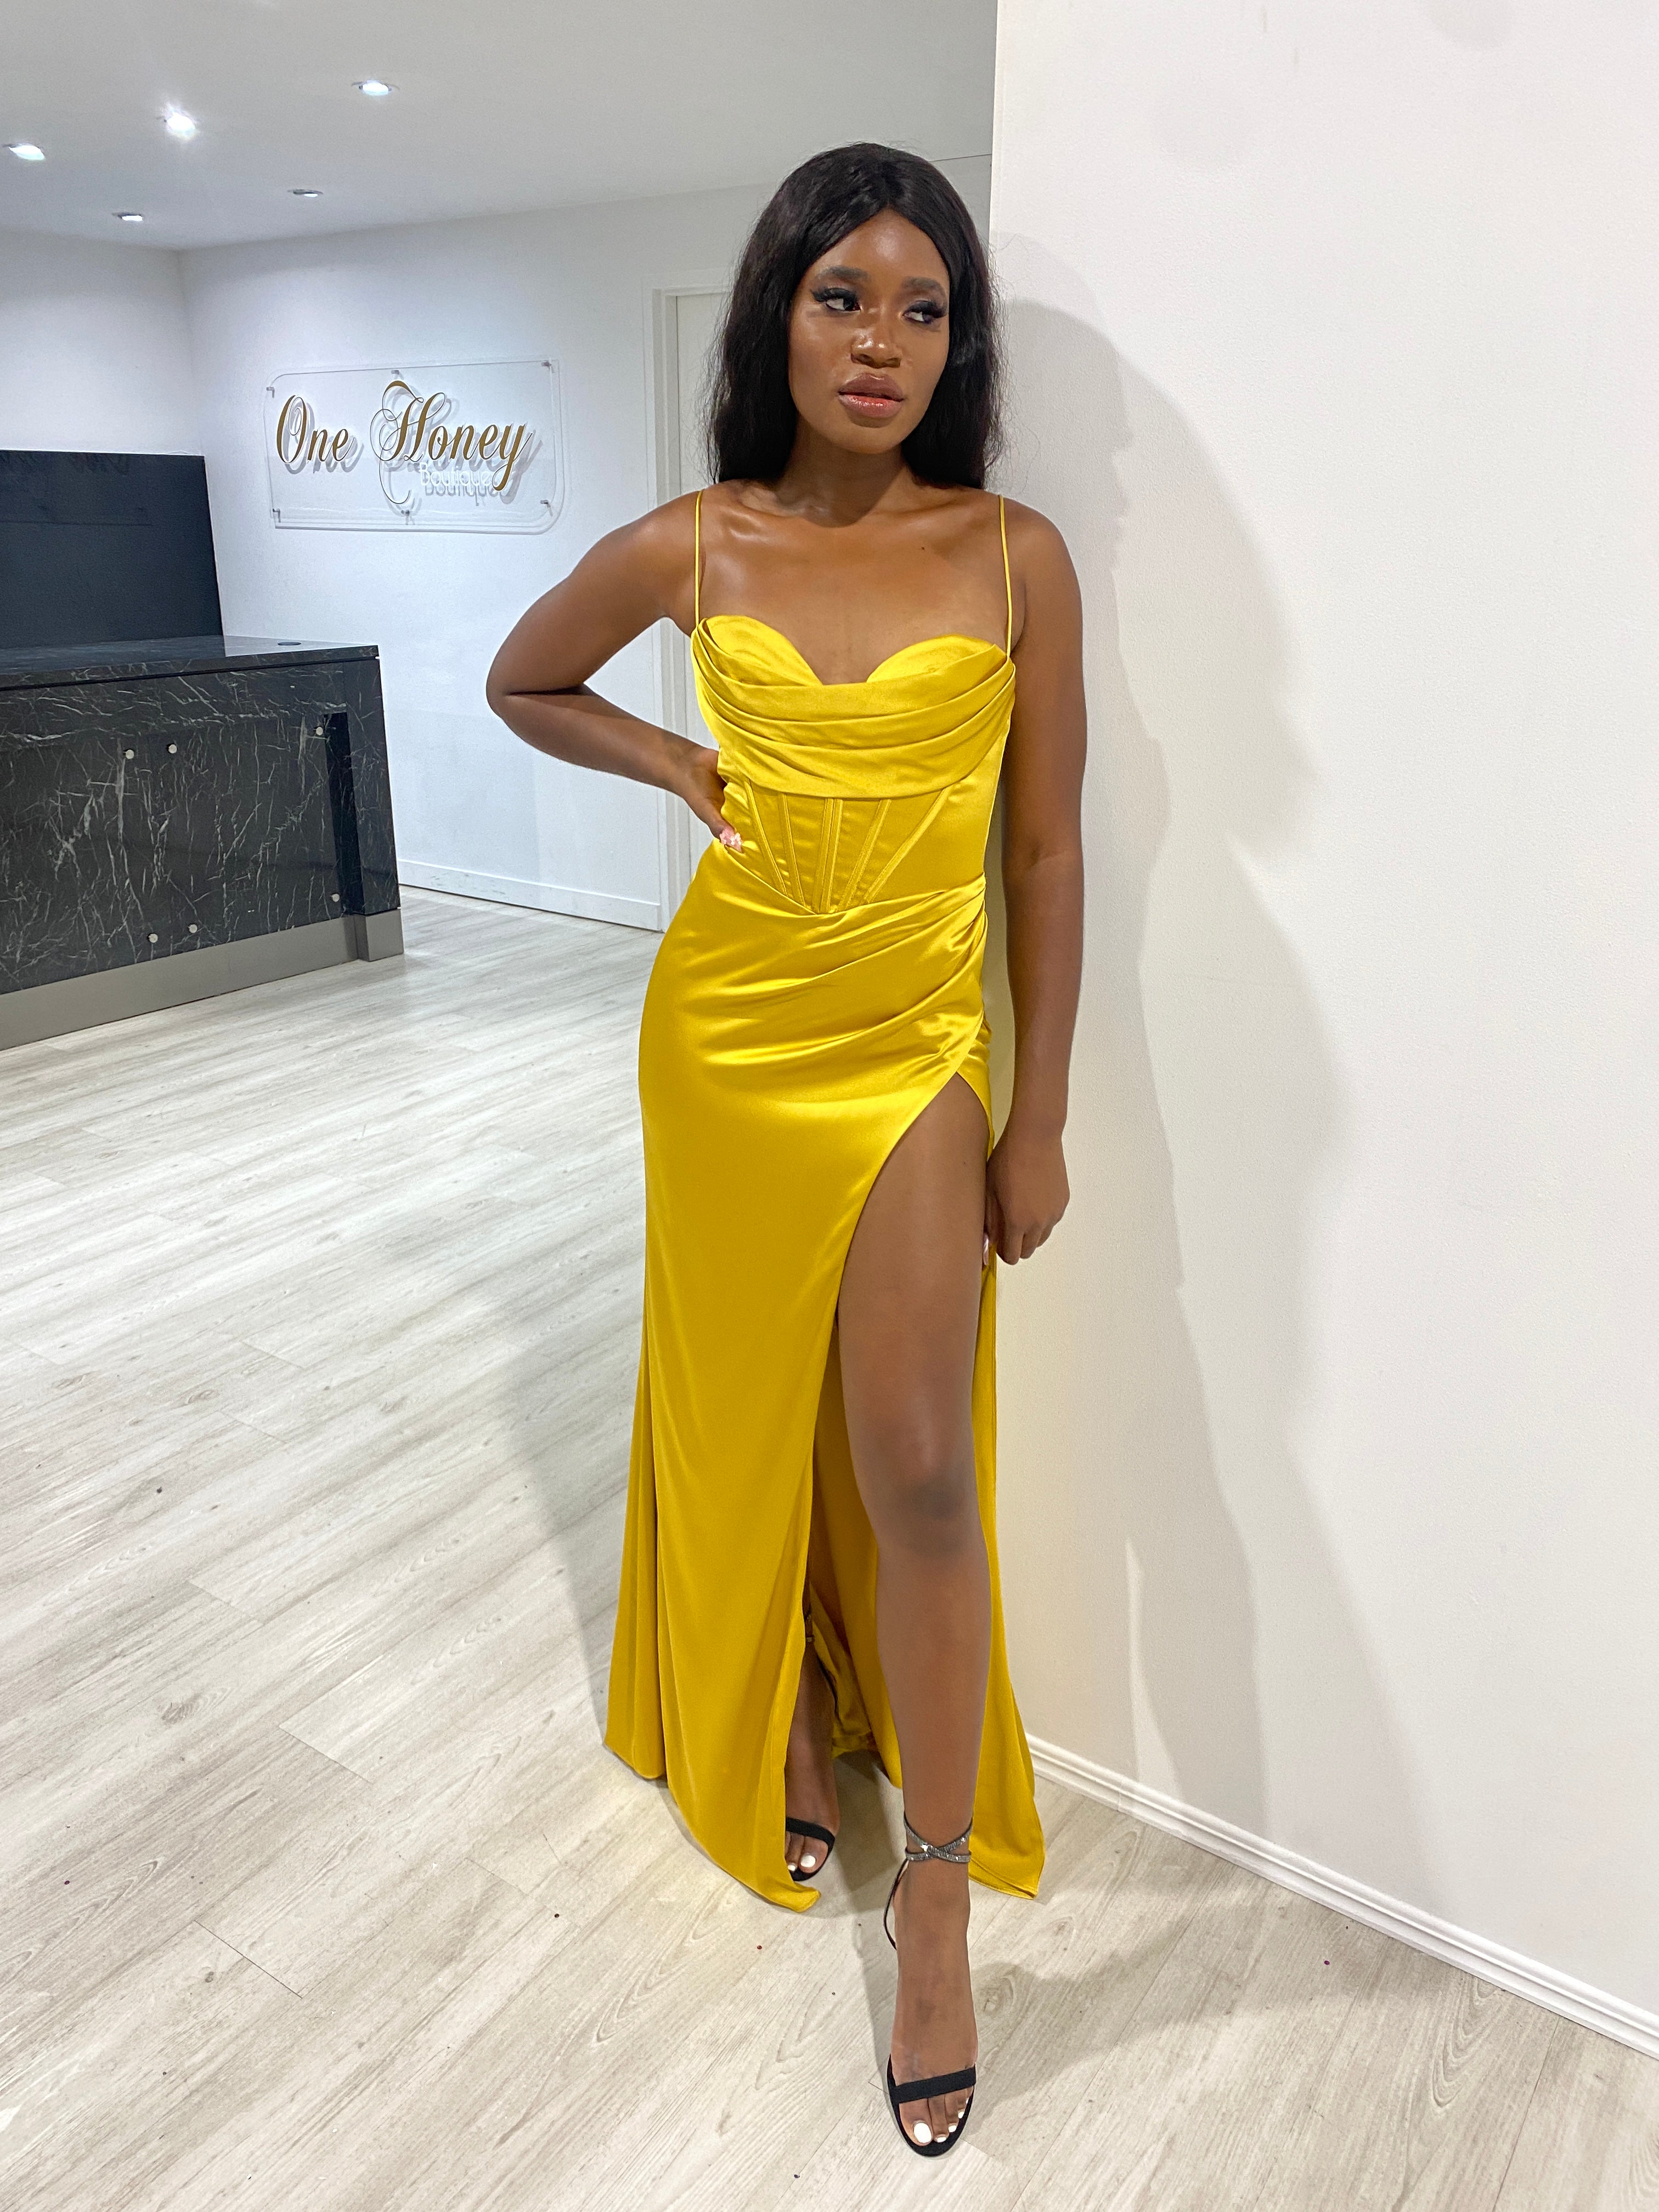 yellow satin dress